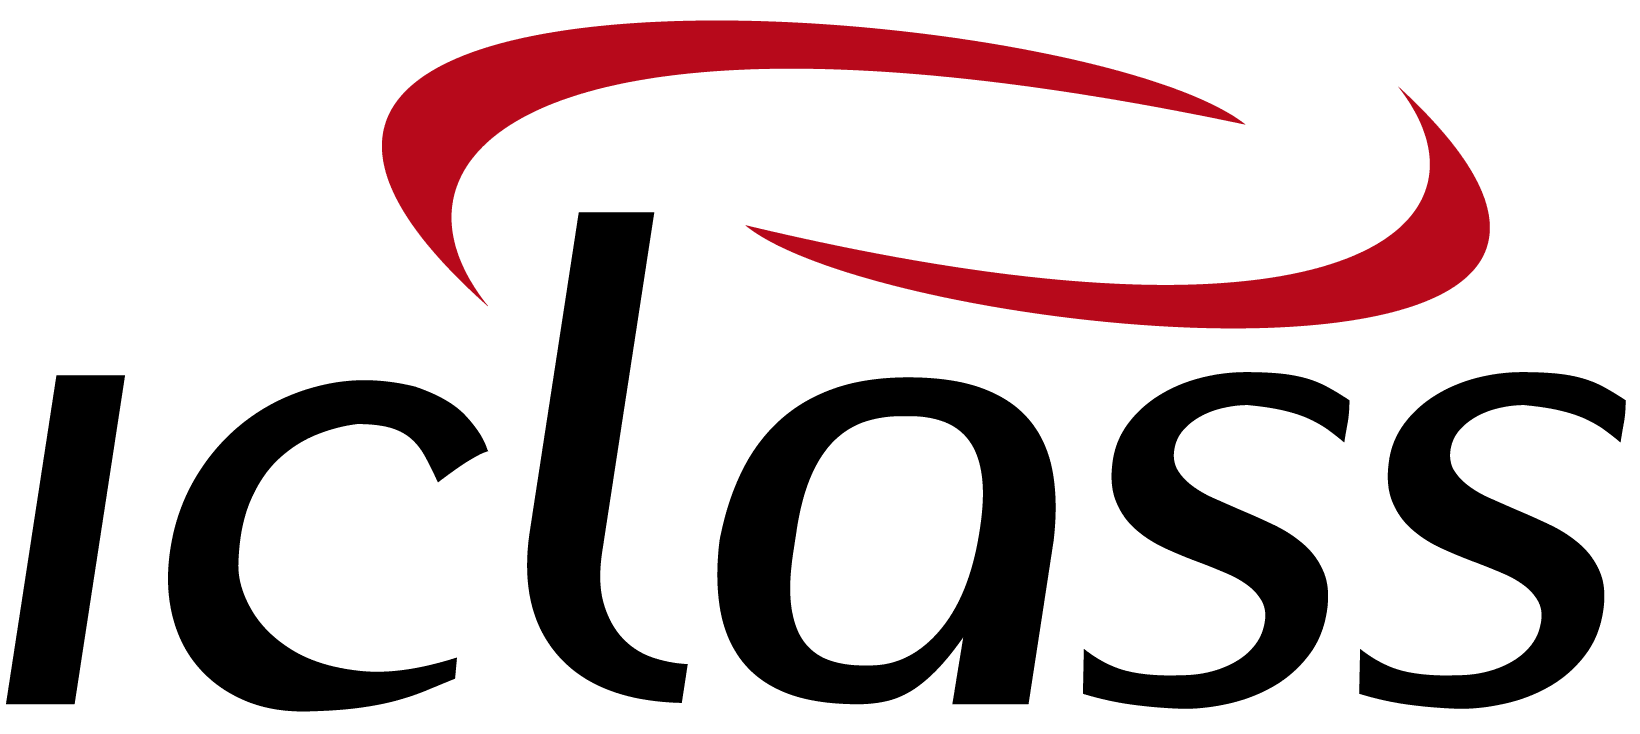 logo IClass Software de Ordem de Serviço Online Sobre